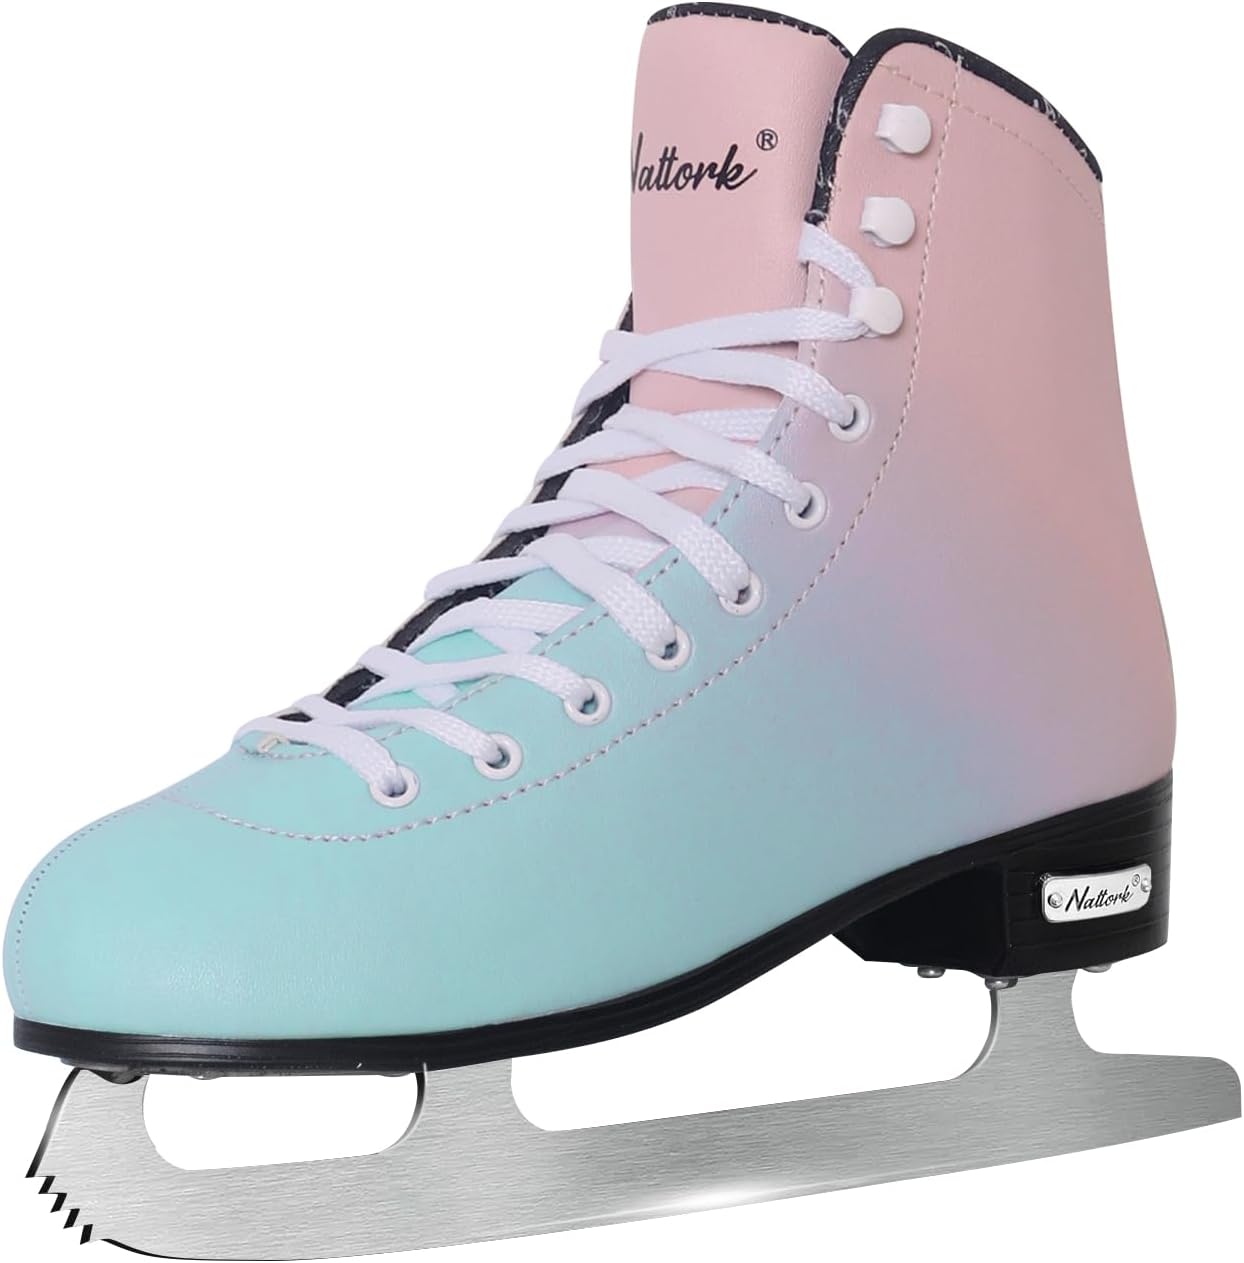 Nattork Ice Figure Skates - Blue & Pink